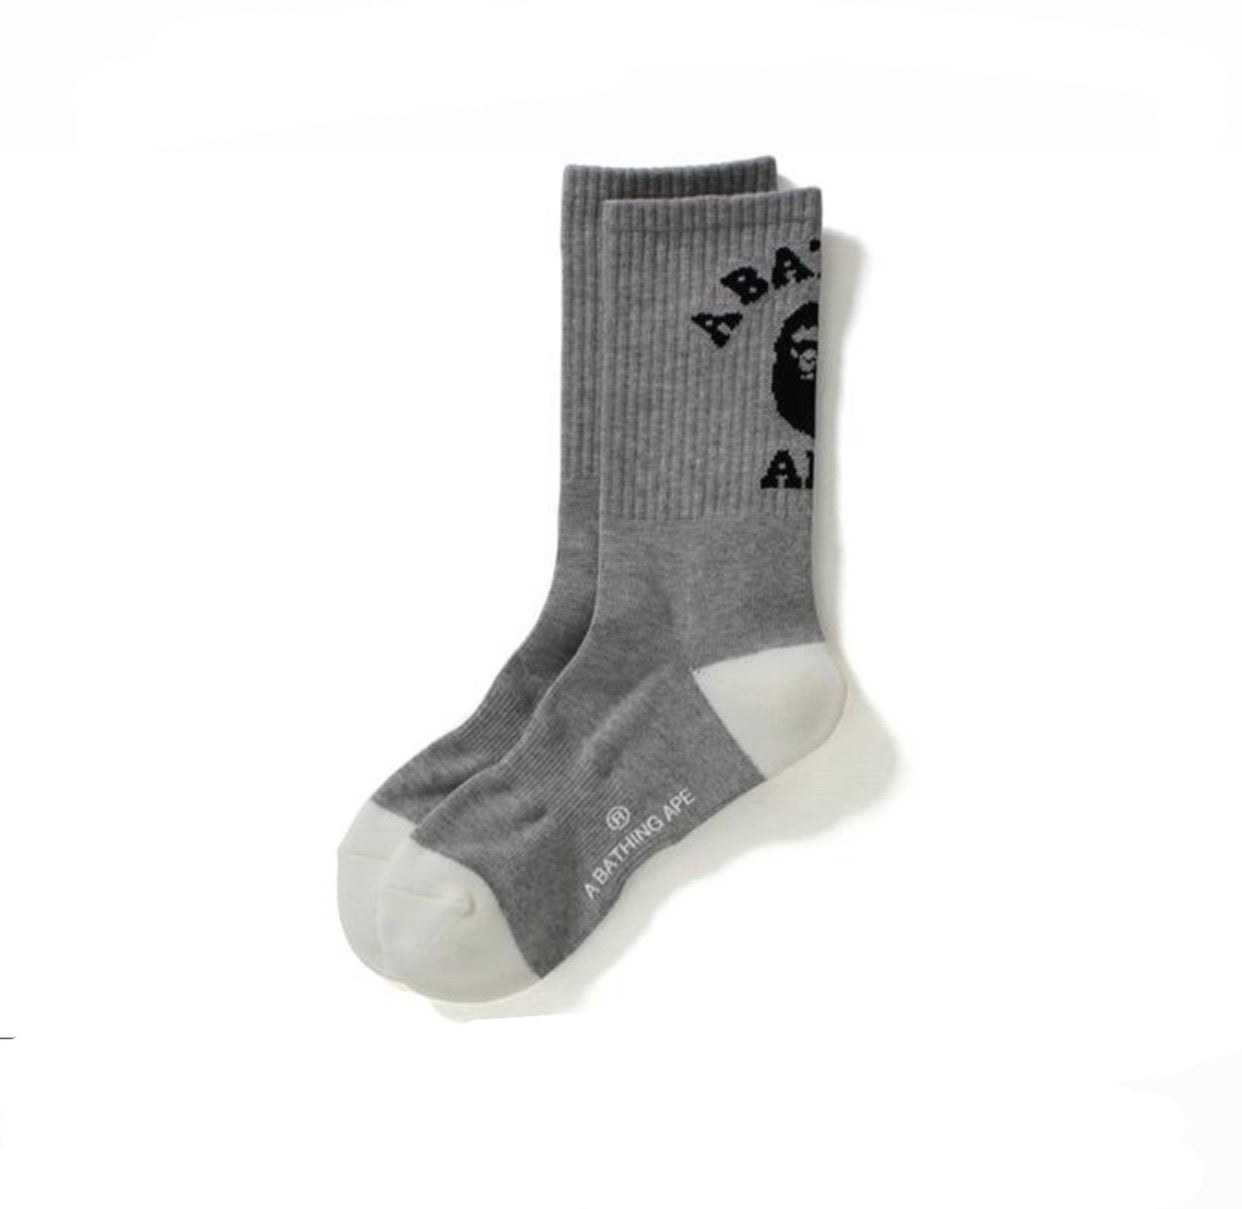 Bape College Socks Grey